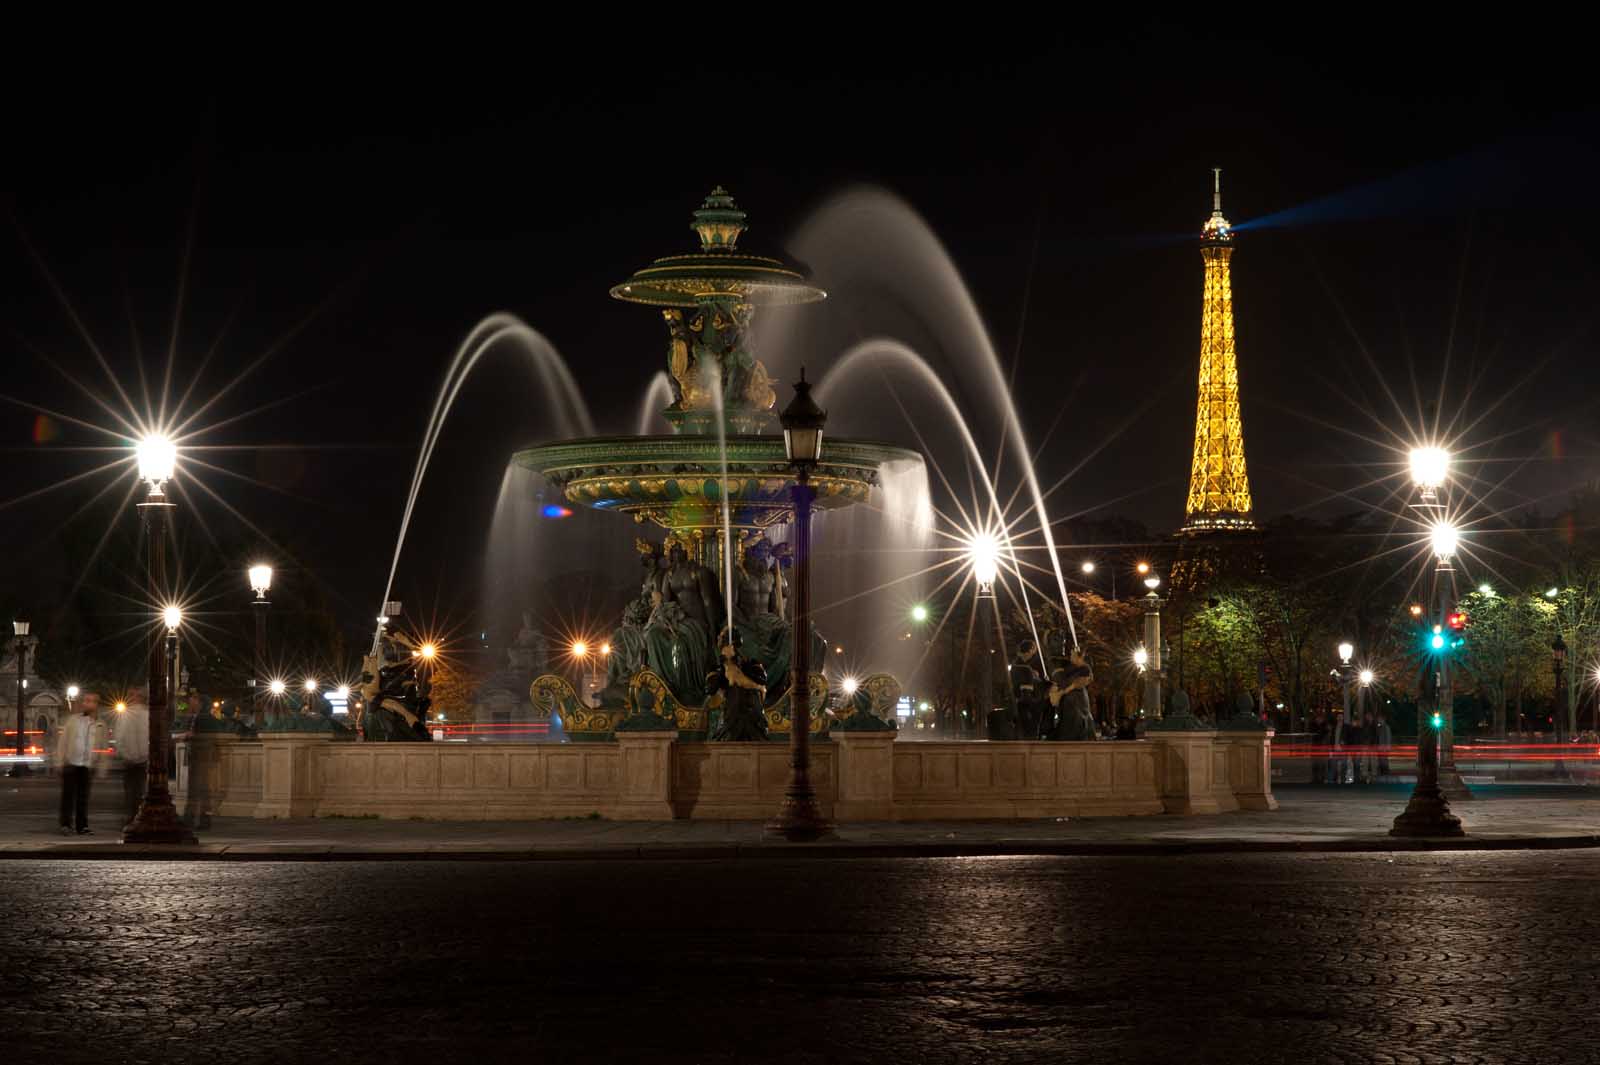 Evening at the Place de la Concorde in Paris